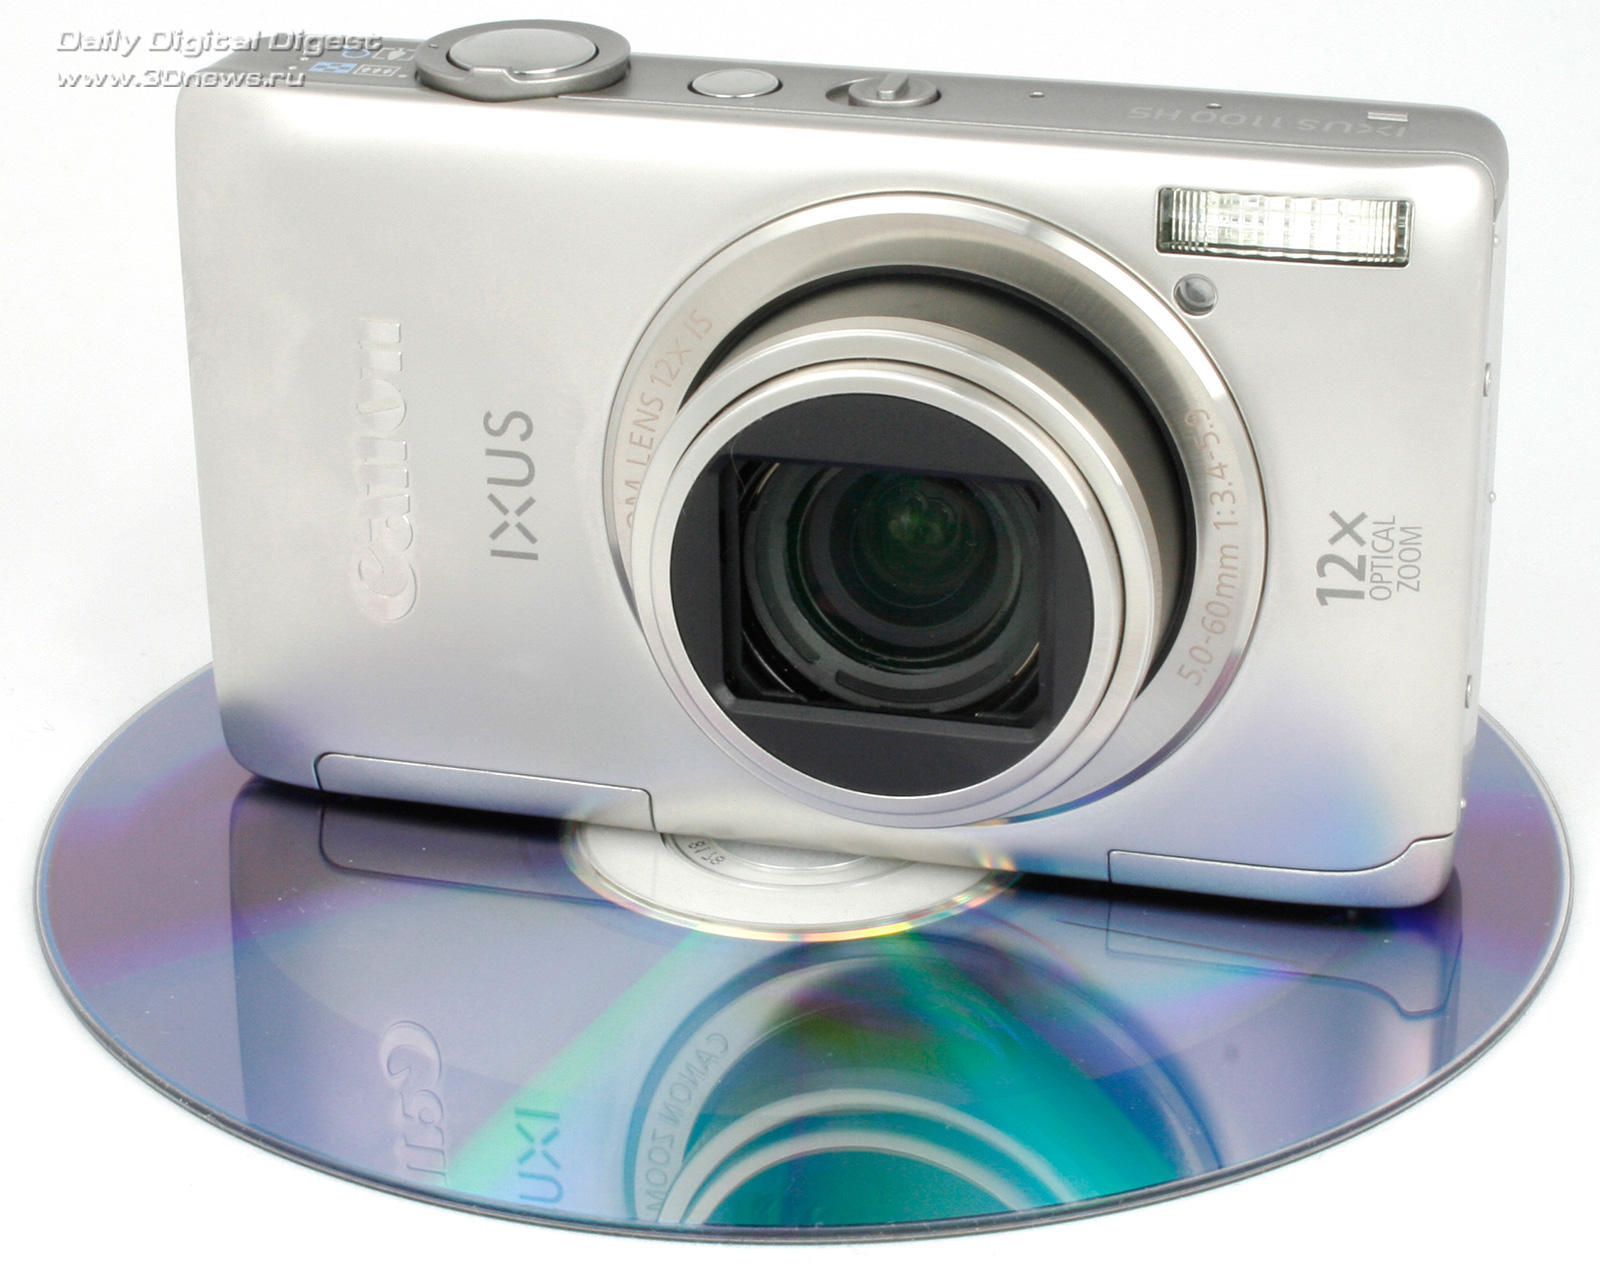 Canon IXUS 1100 HS Digital Camera Review | ePHOTOzine